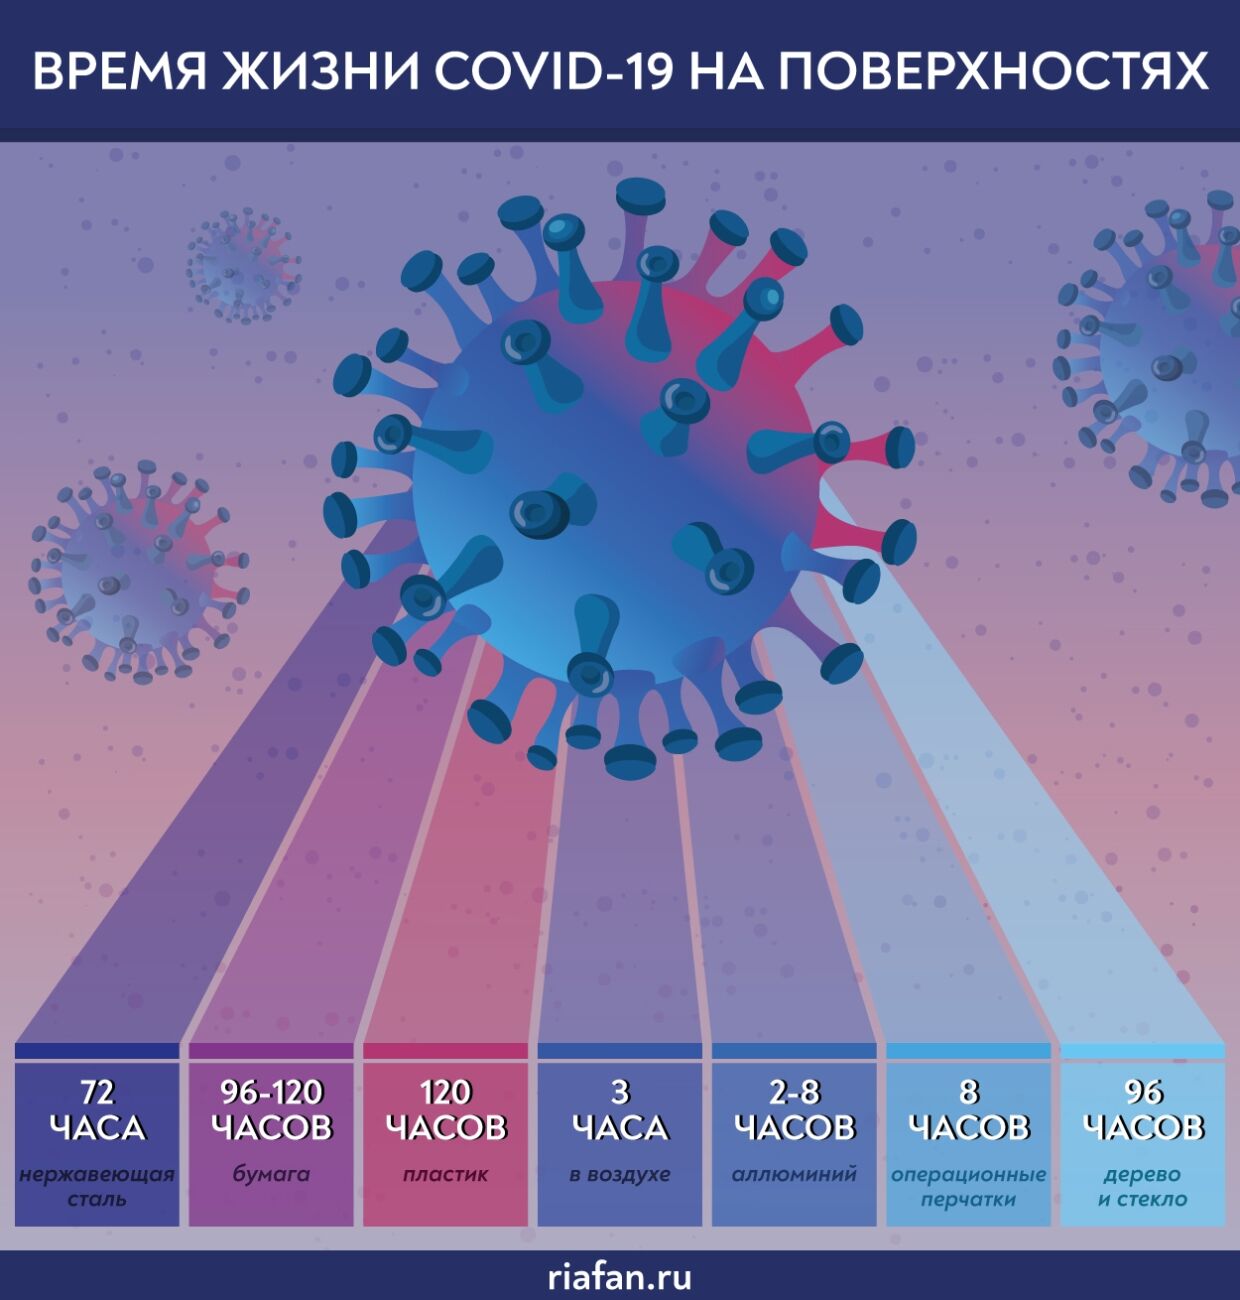 Кардиолог рассказал, для кого коронавирус наиболее опасен